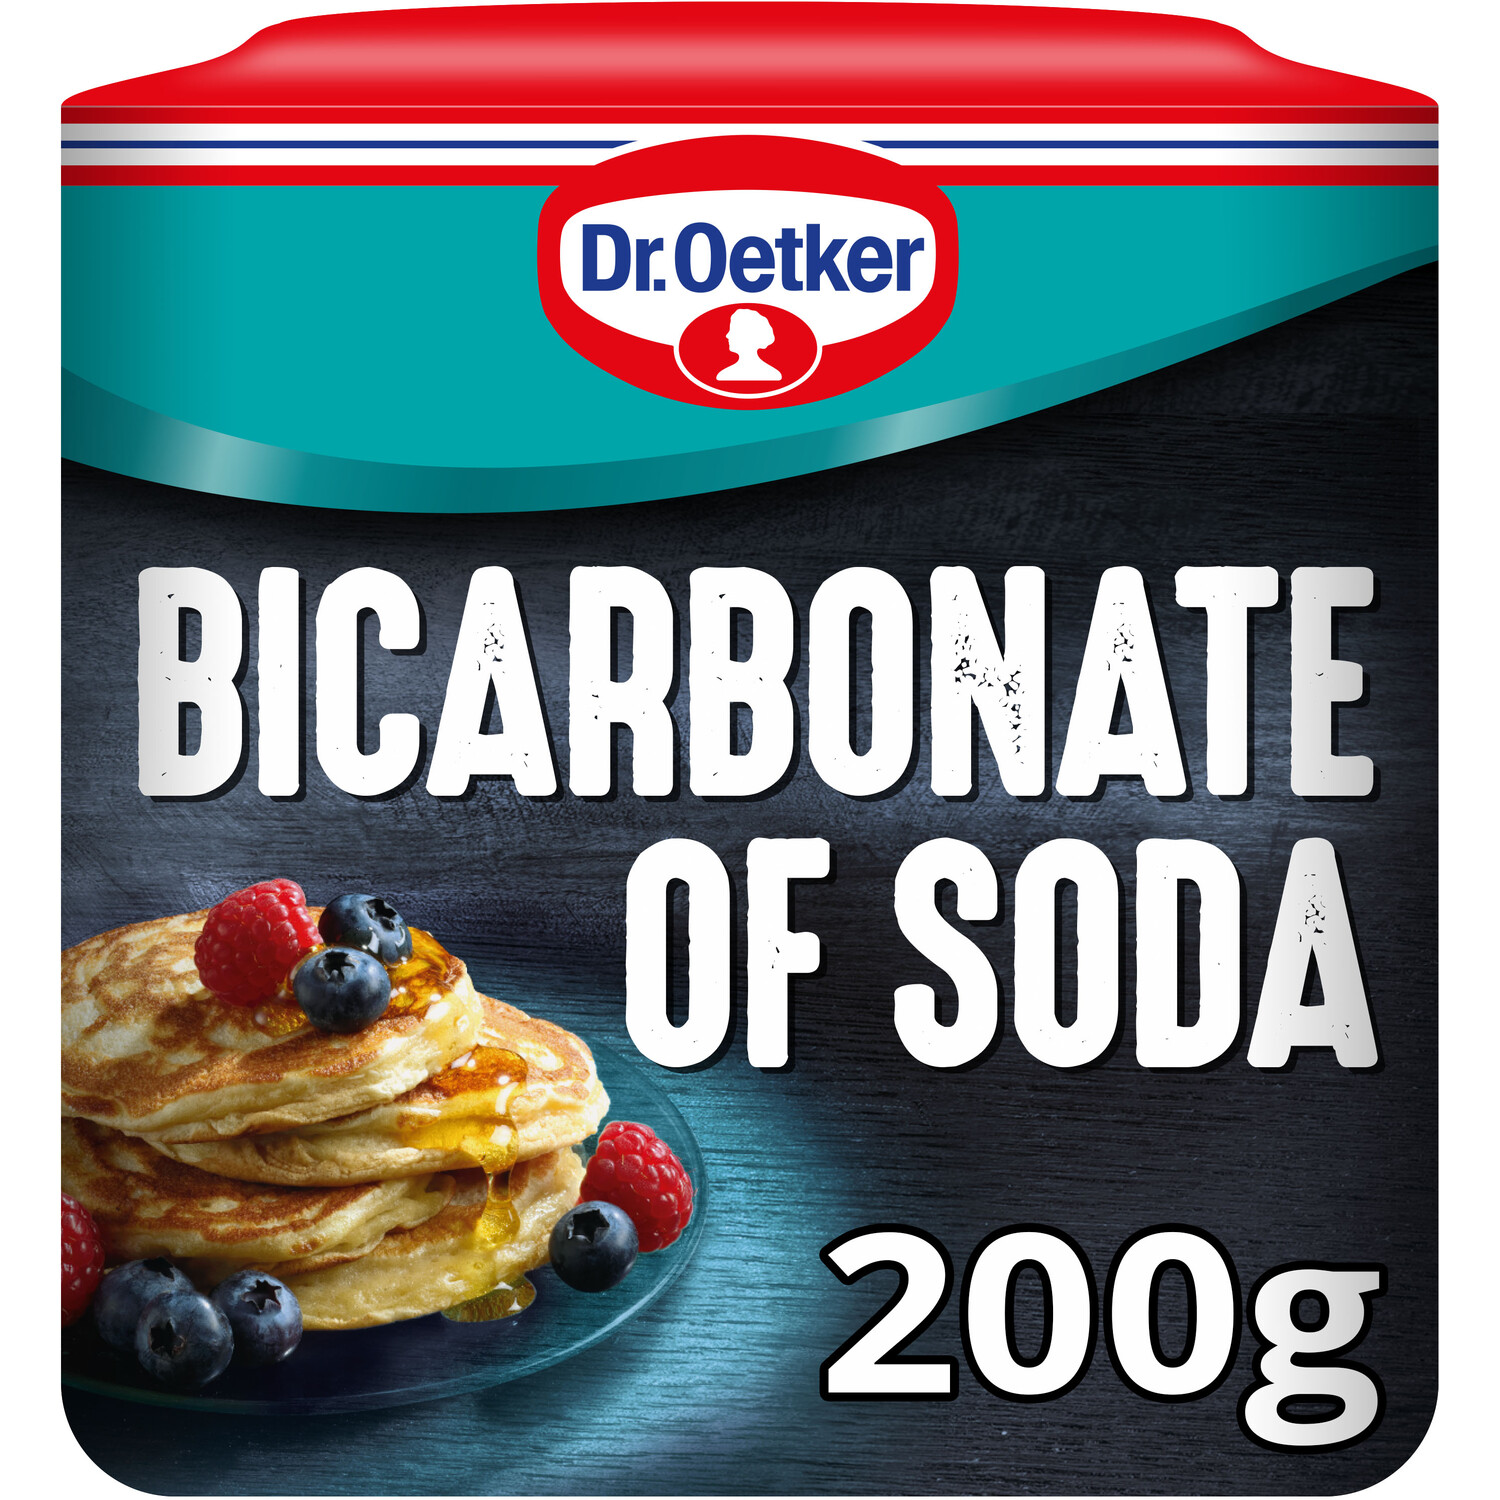 Dr. Oetker Bicarbonate of Soda - White Image 1